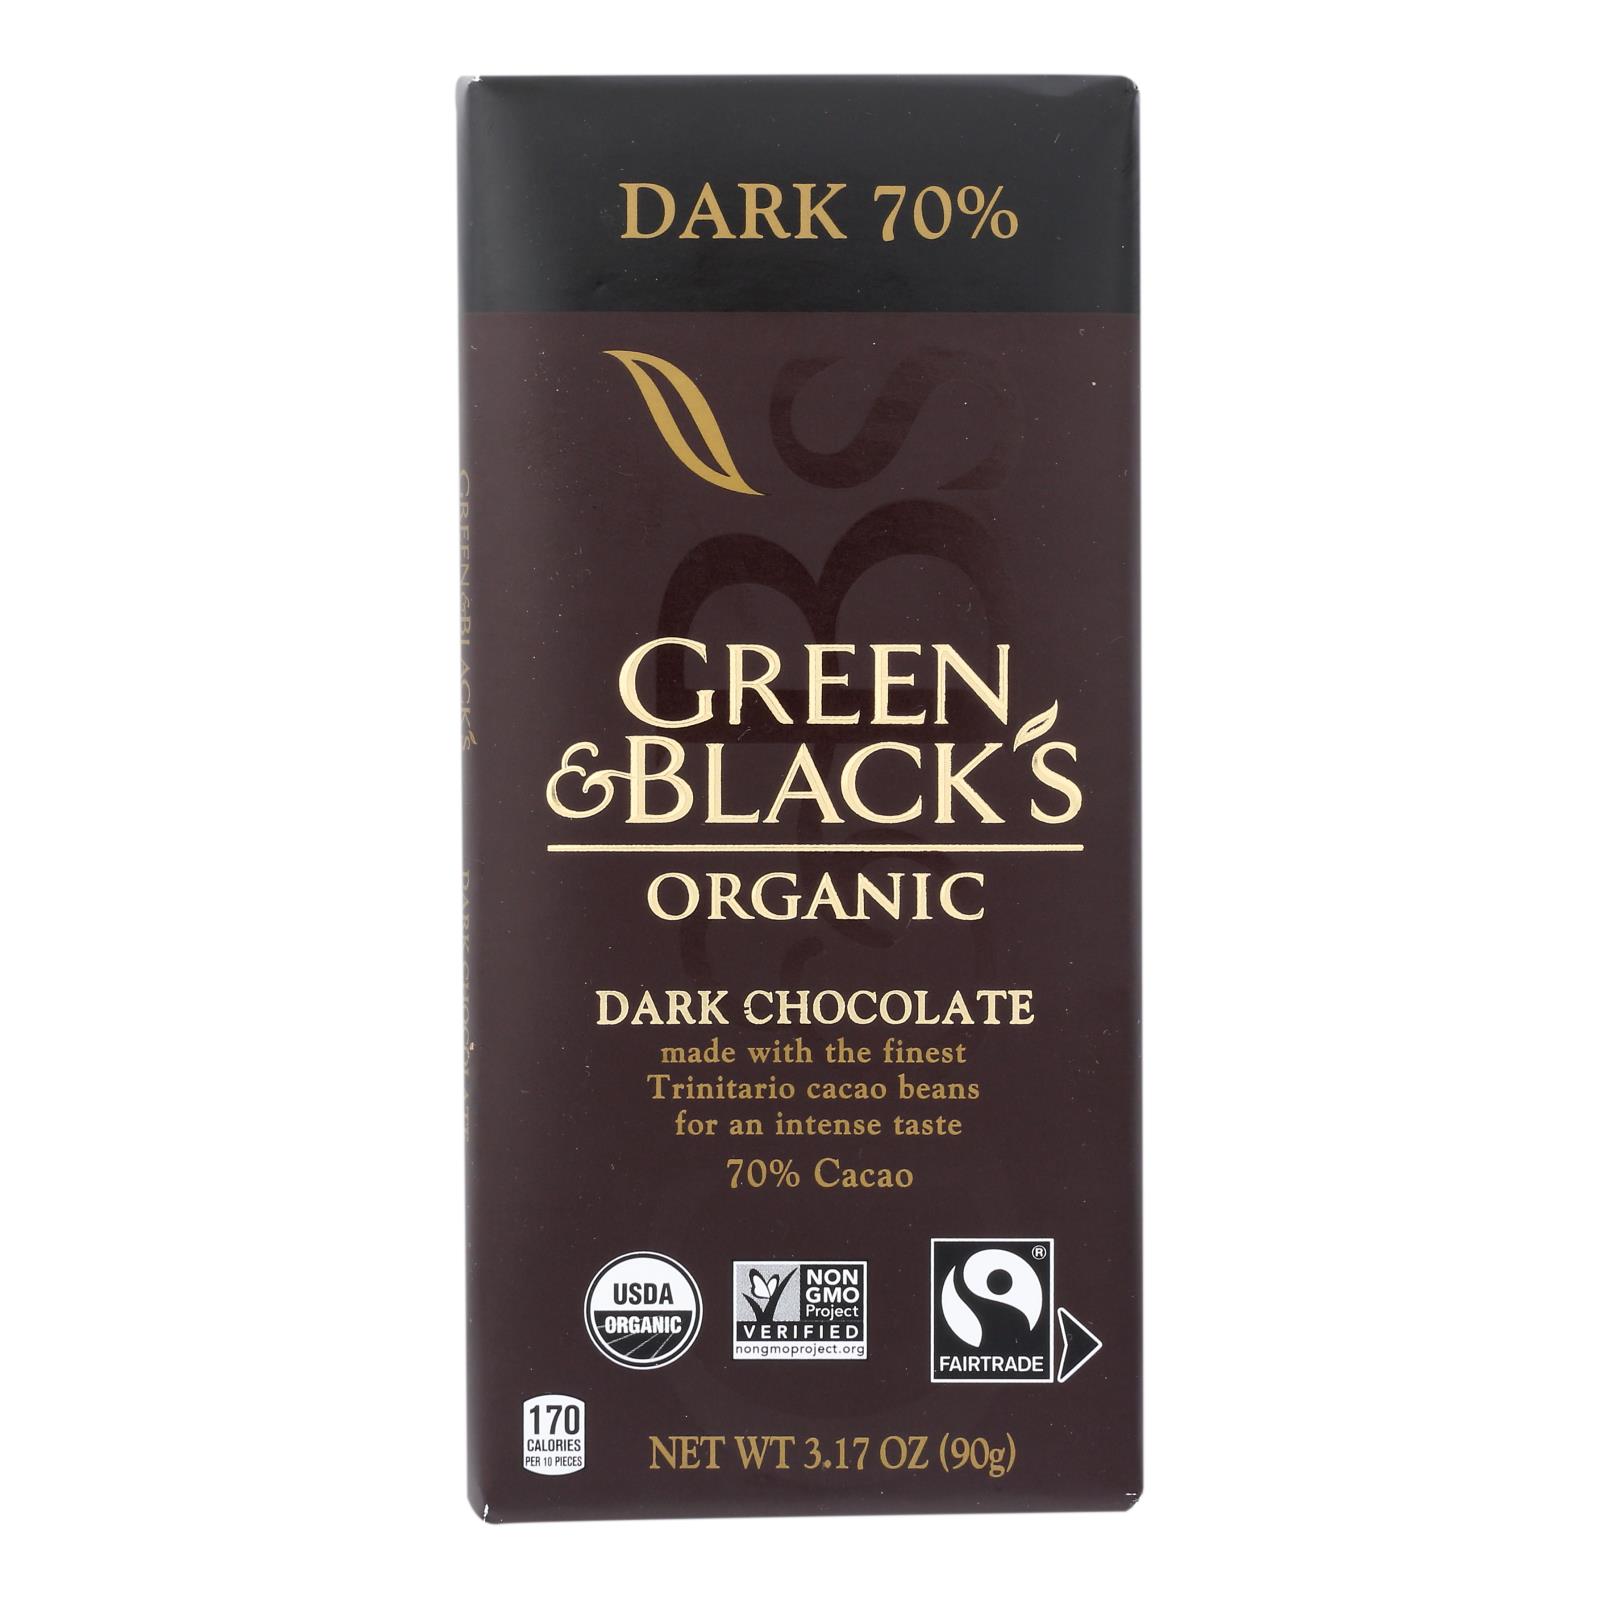 Green & Black's - Chocolate Dark 70% - 10개 묶음상품 - 3.17 OZ